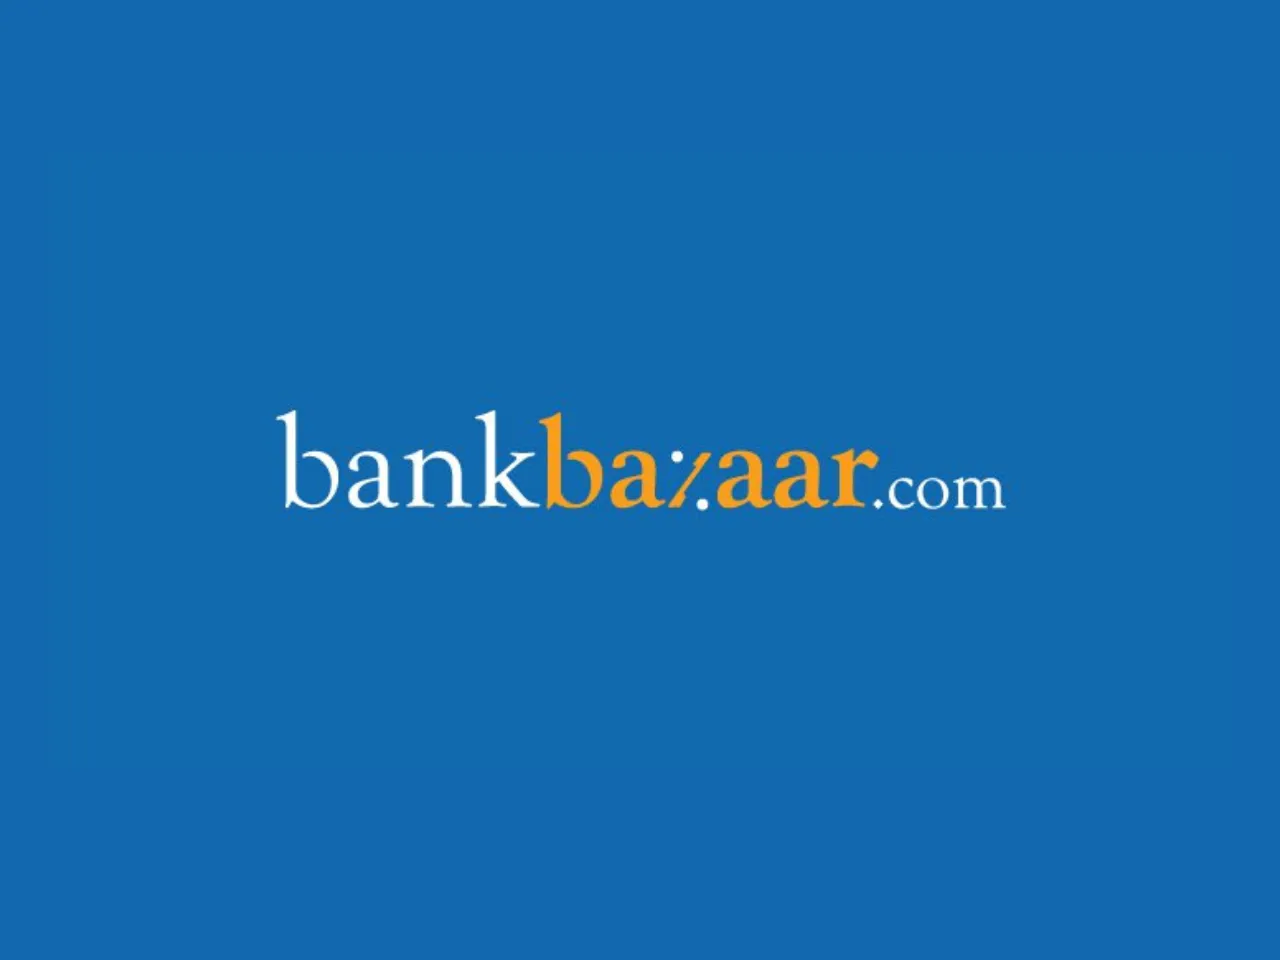 BankBazaar Logo